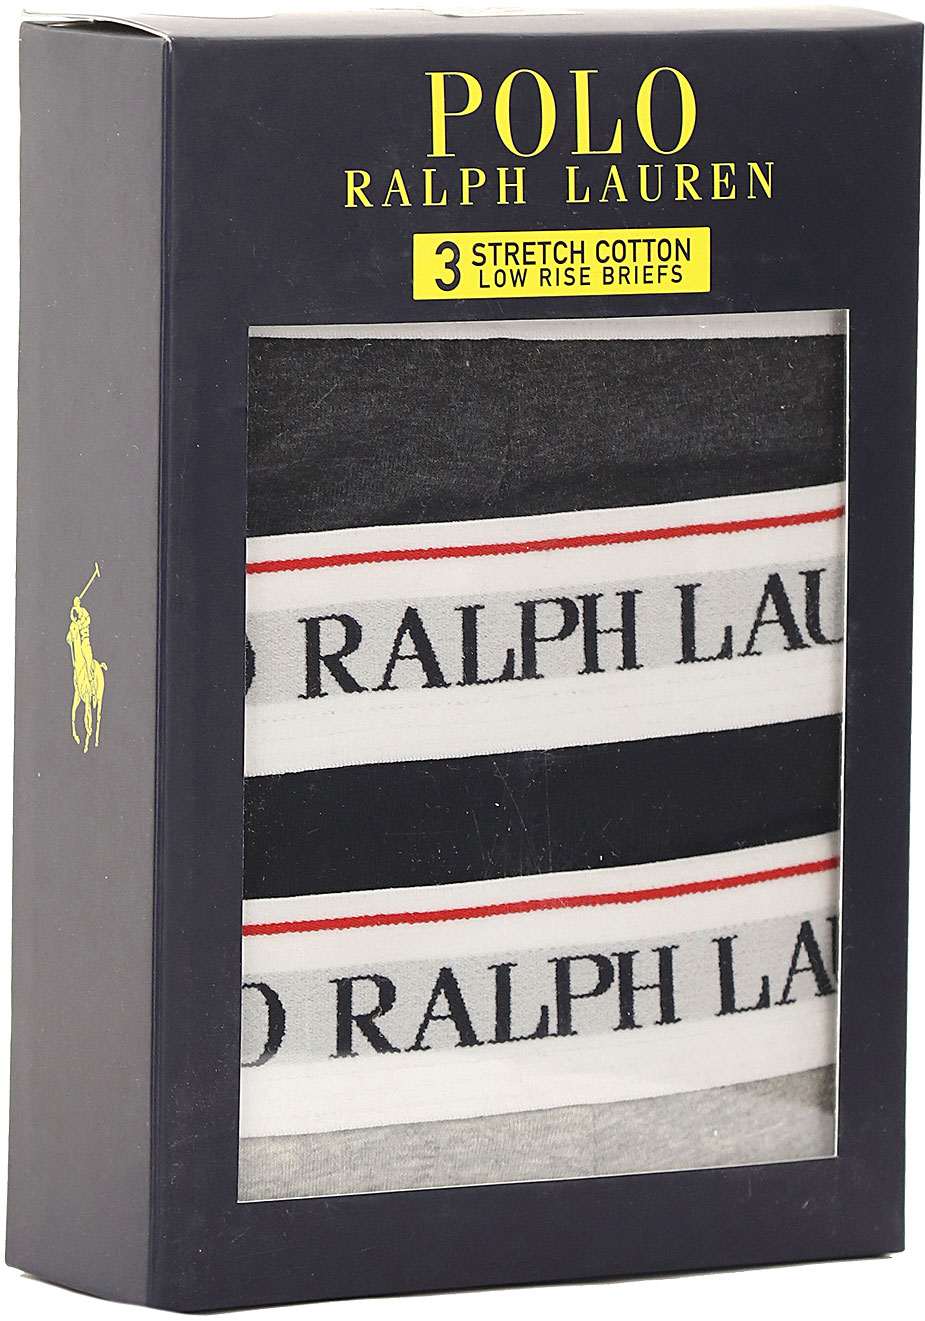 Mens Underwear Ralph Lauren, Style code: 714805506003--